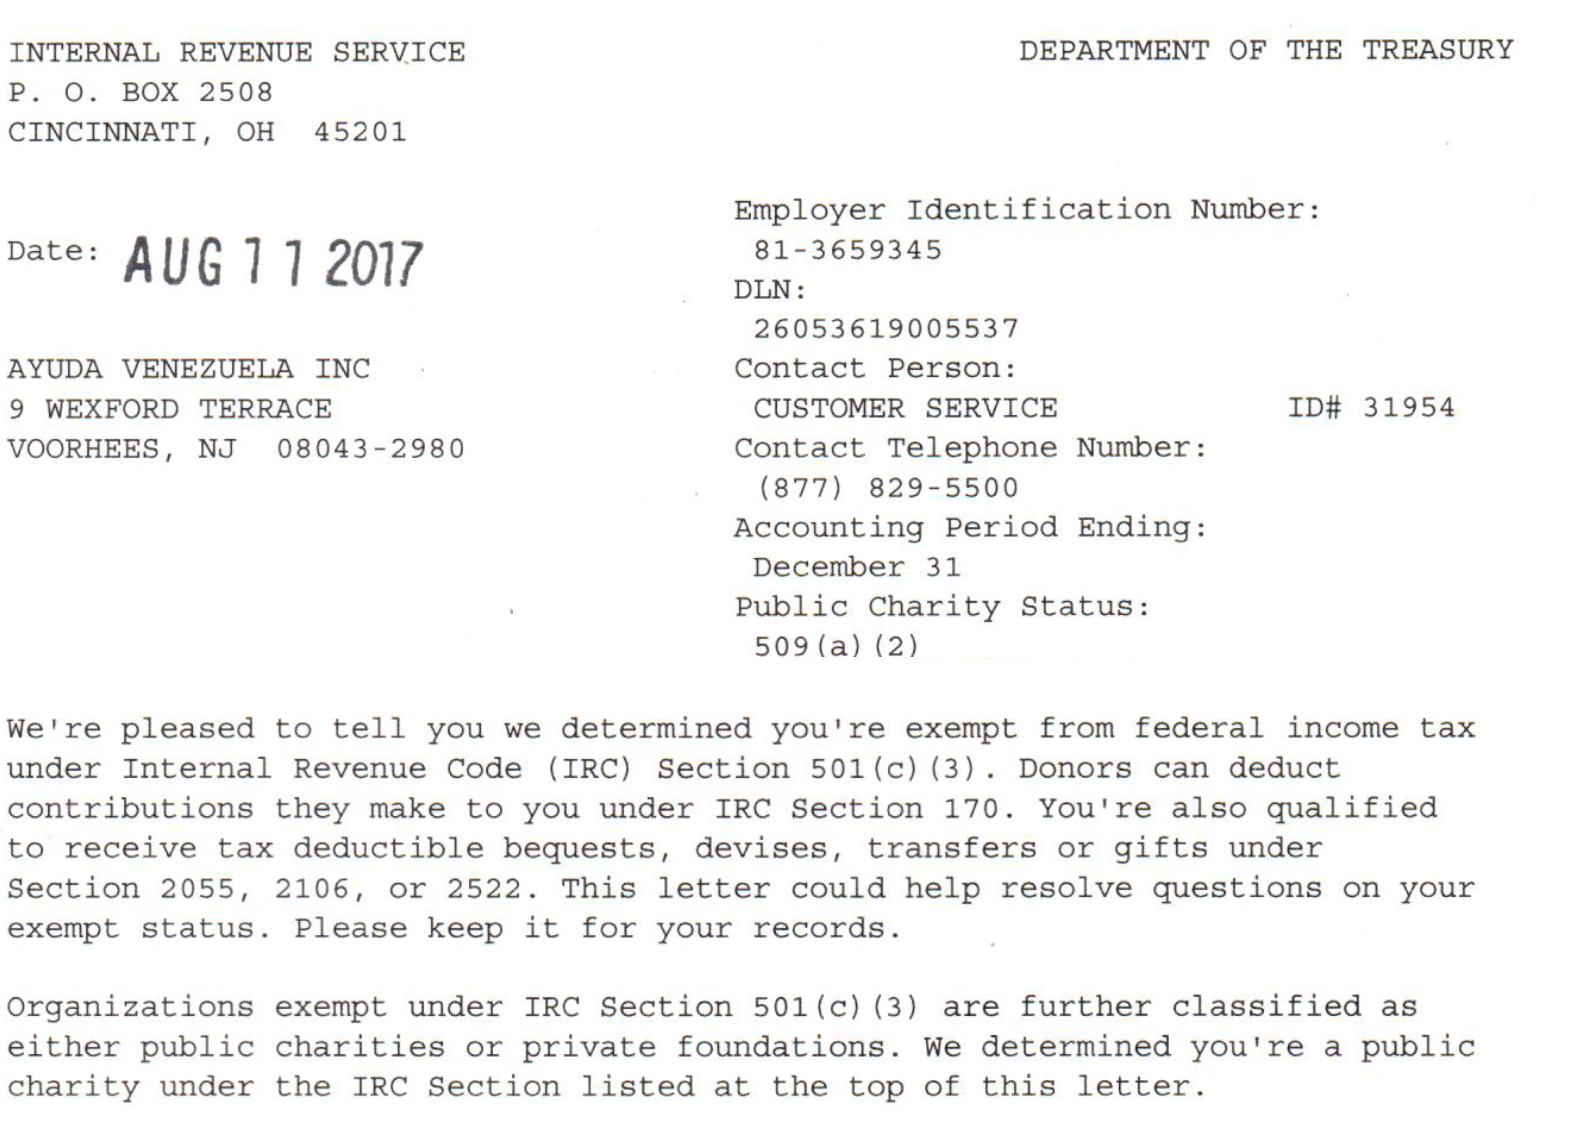 IRS Determination Letter Excerpt